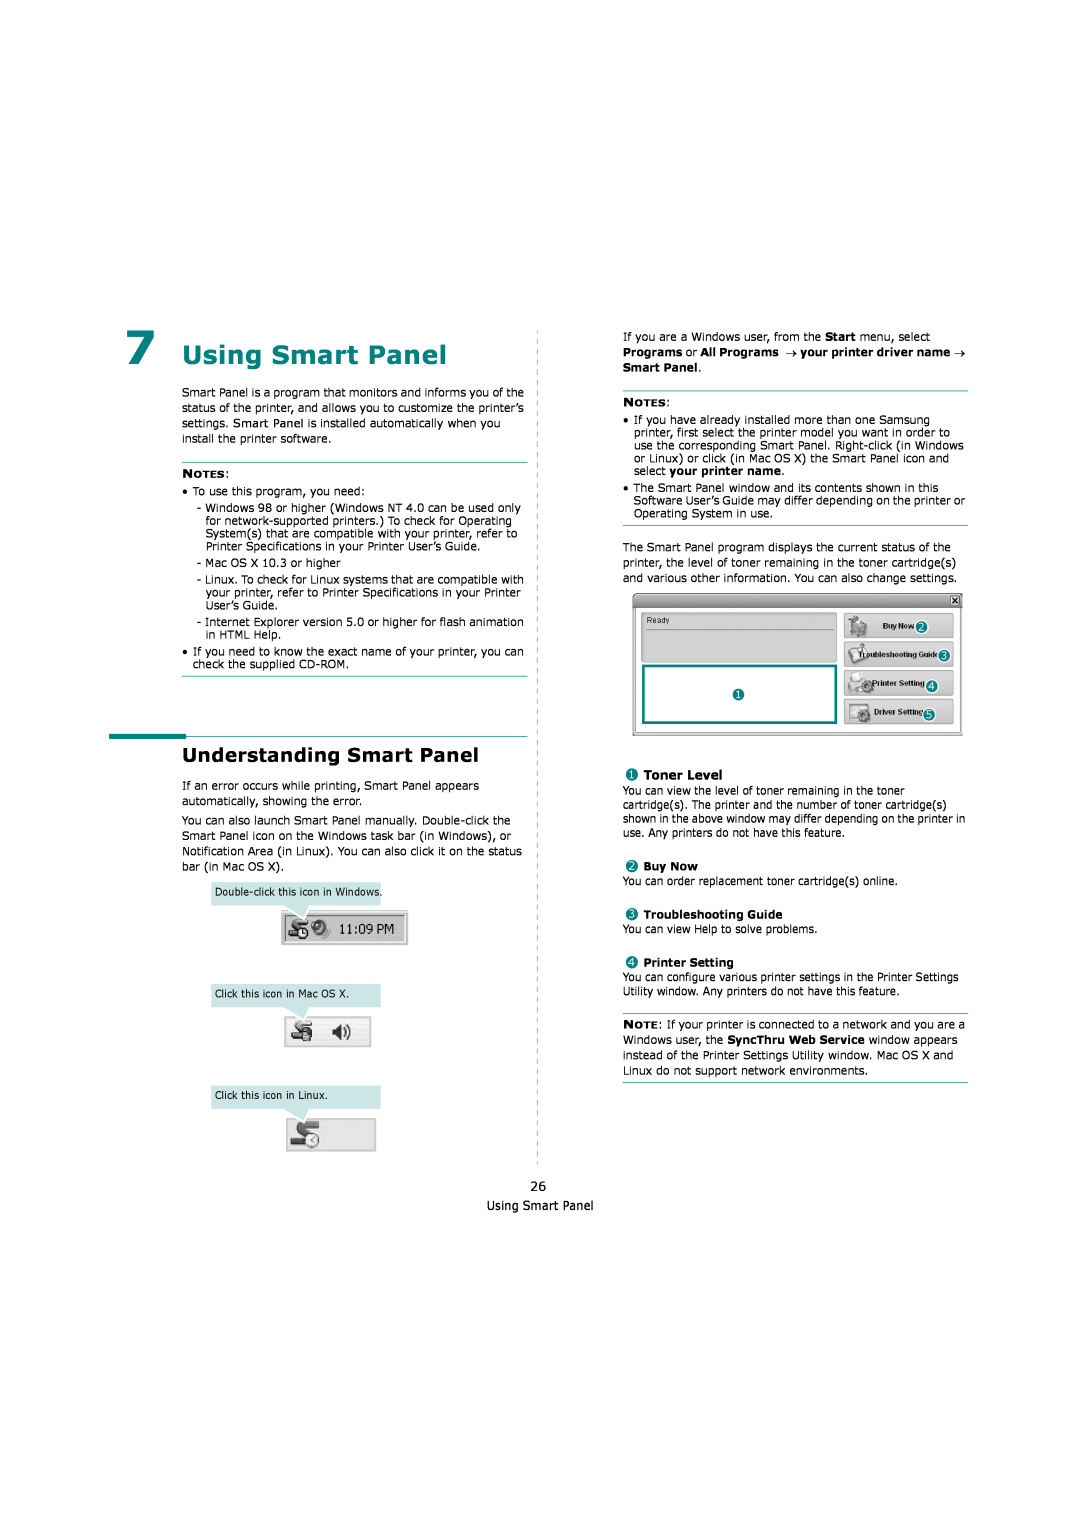 Samsung ML-4550 Using Smart Panel, Understanding Smart Panel, Toner Level, Buy Now, Troubleshooting Guide, Printer Setting 